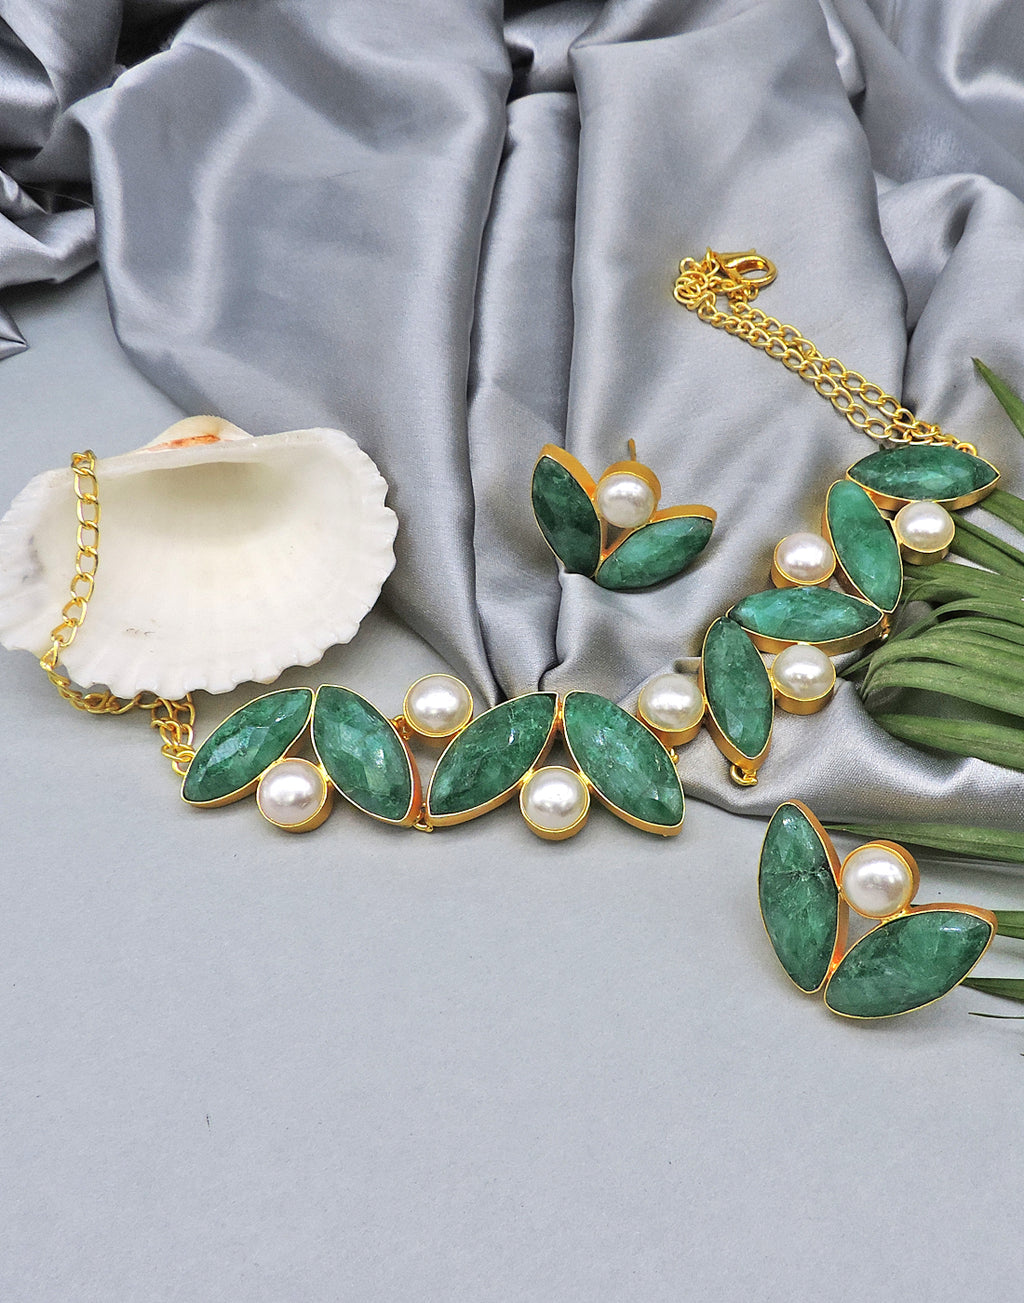 Green Haathi Studs - Statement Earrings - Gold-Plated & Hypoallergenic Jewellery - Made in India - Dubai Jewellery - Dori